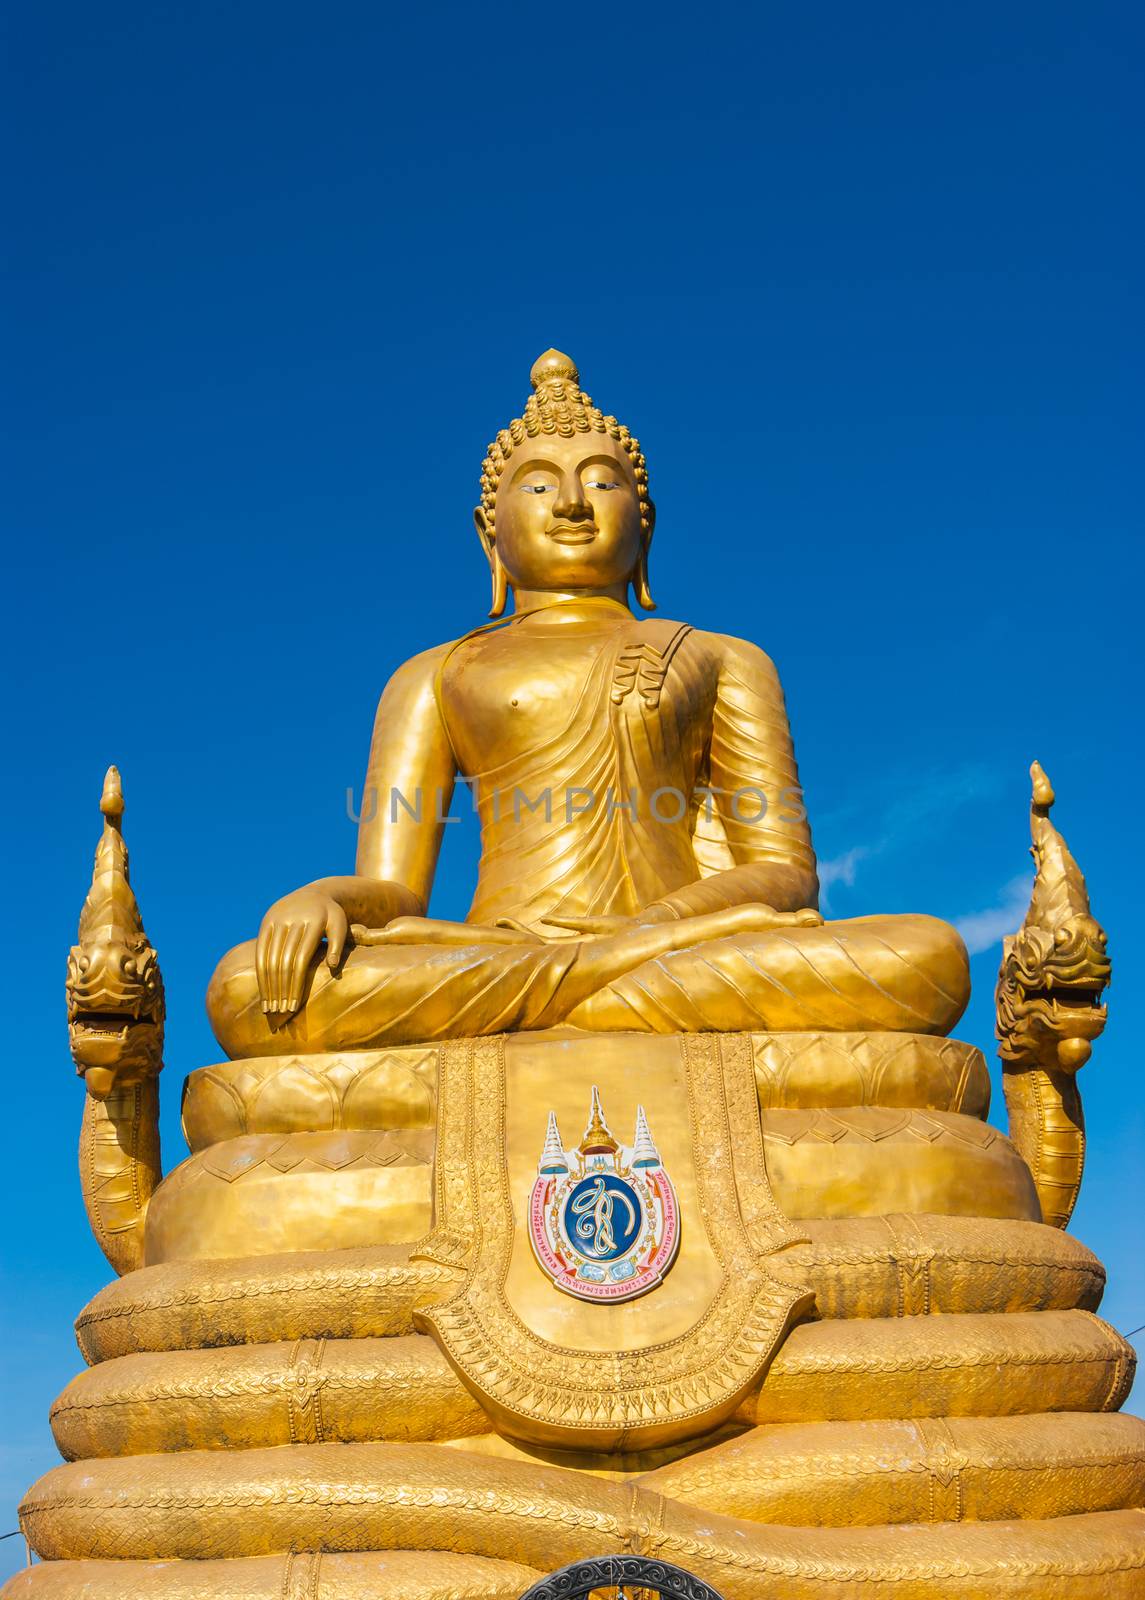 12 meters high Big Buddha Image, made of 22 tons of brass in Phu by oleg_zhukov